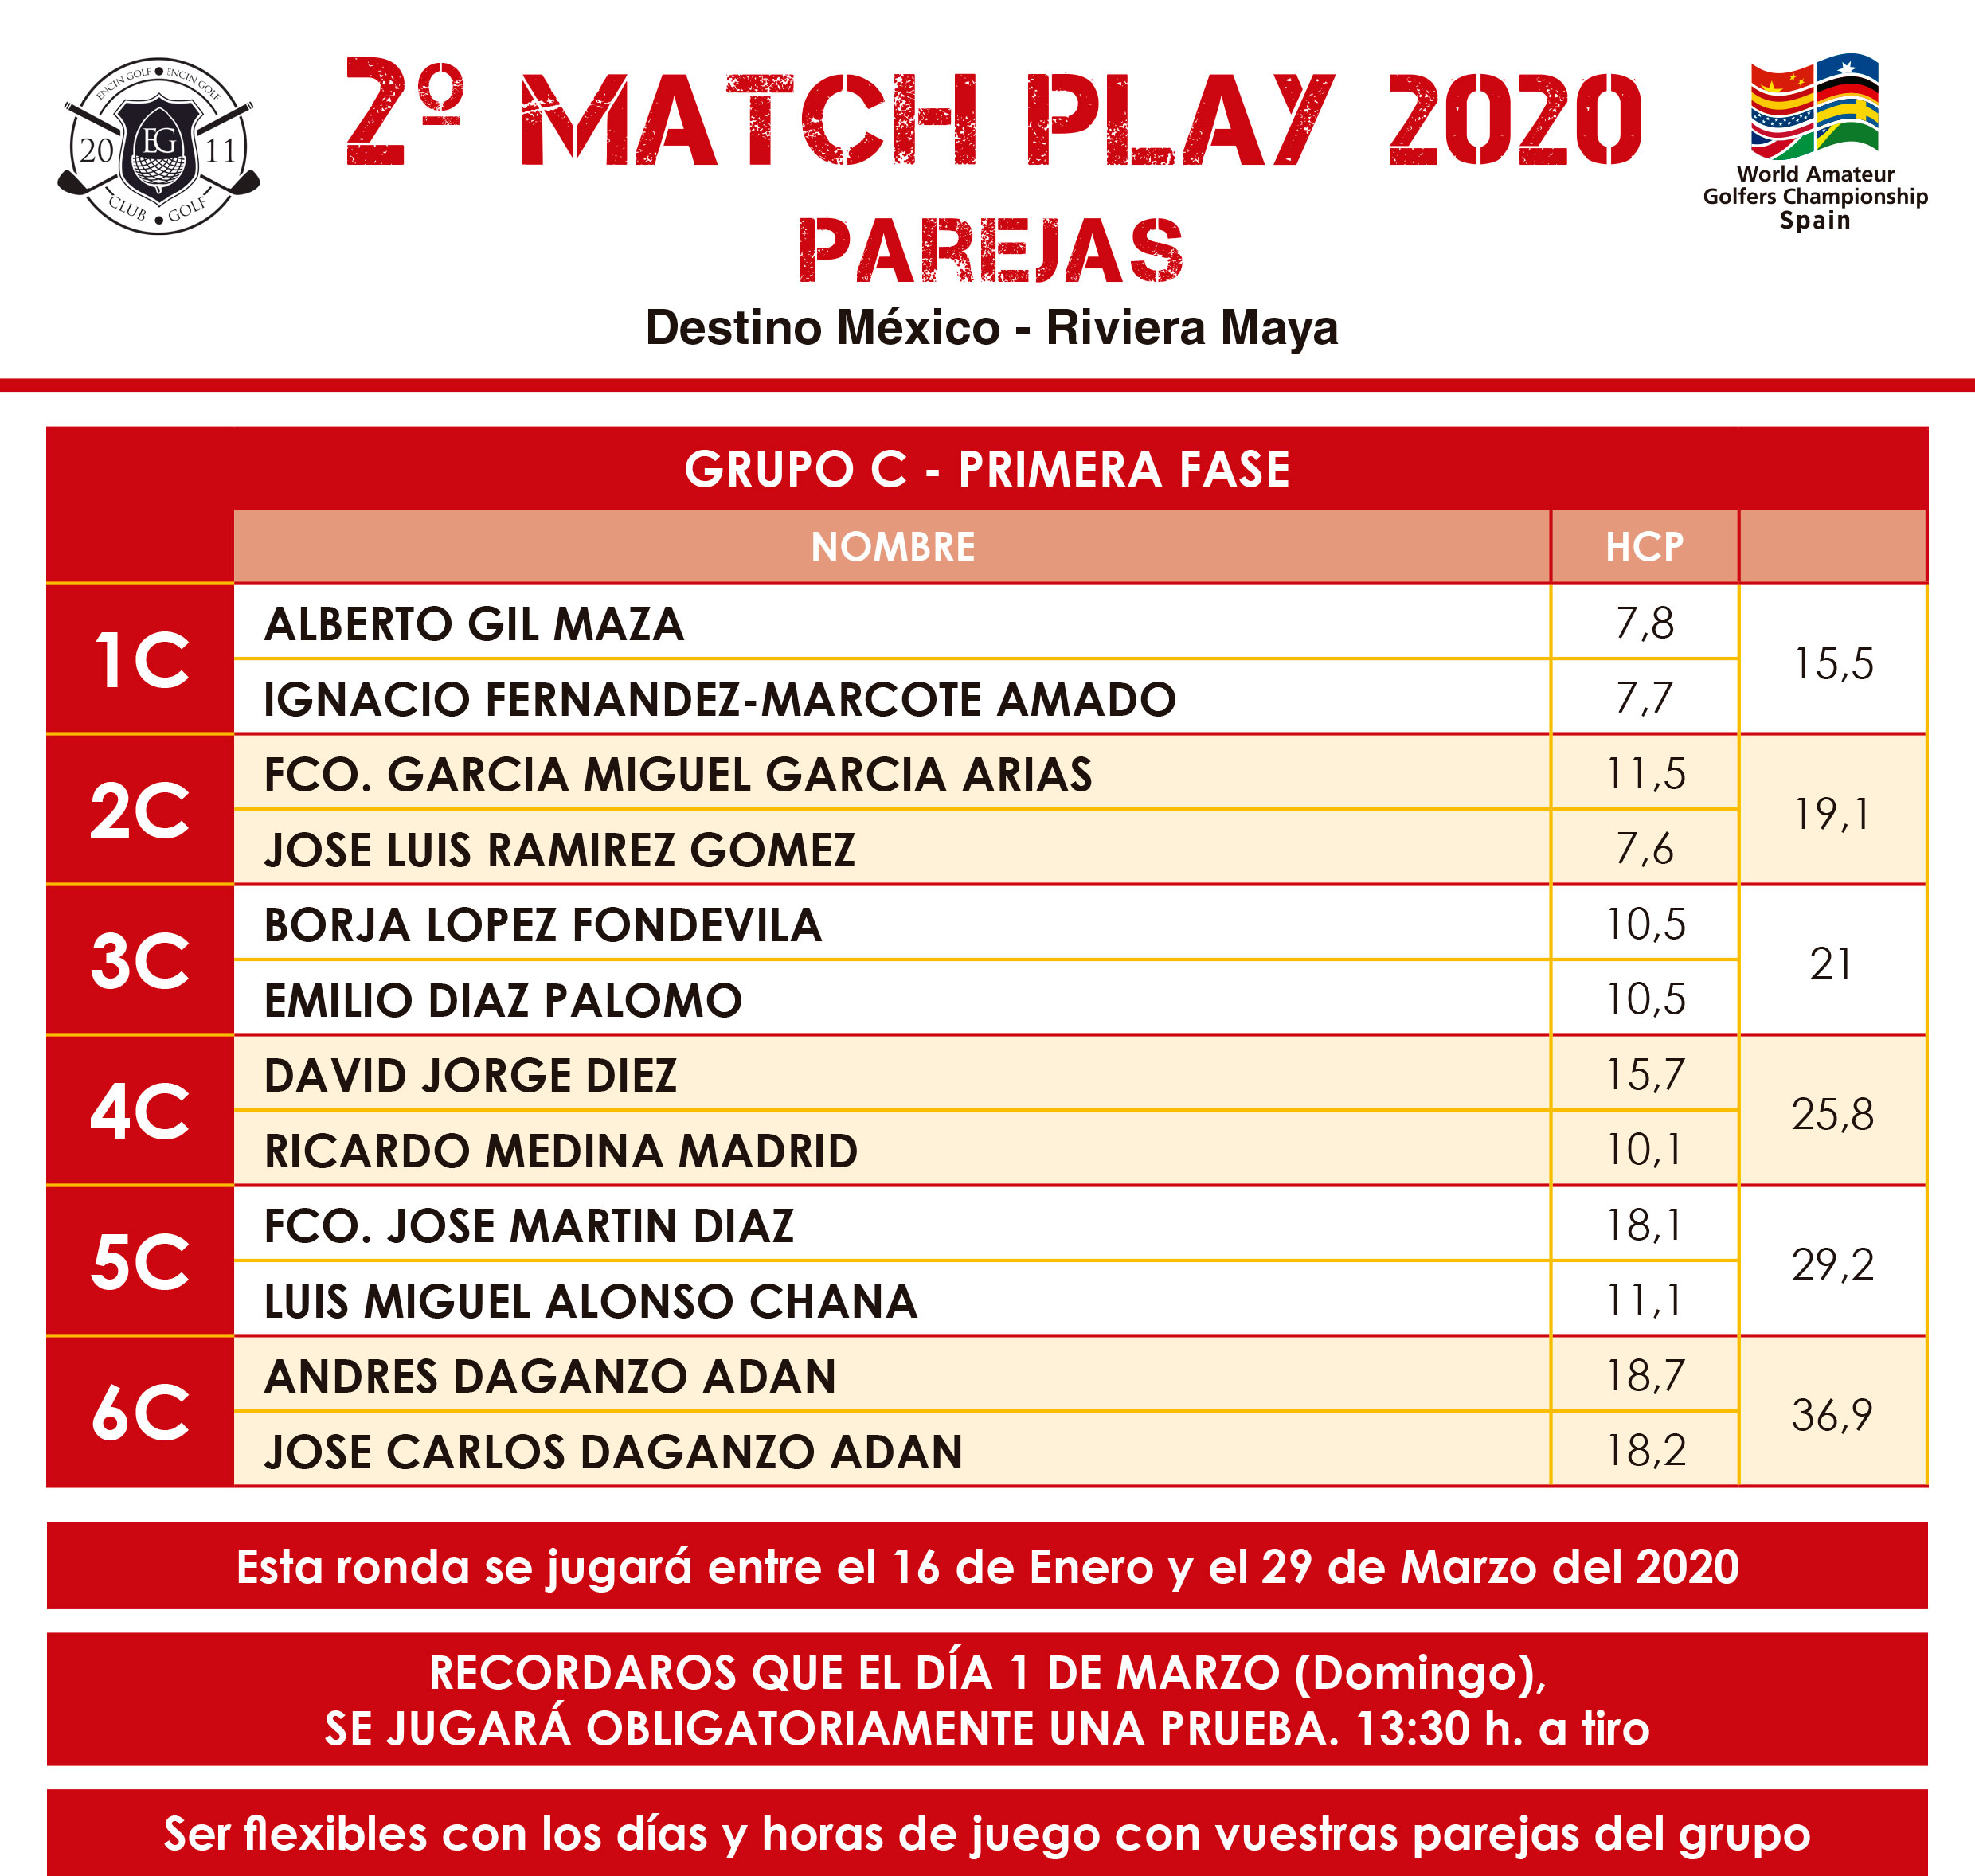 WAGC SPAIN - MATCH PLAY 2020 PAREJAS - 1ª FASE - GRUPO C